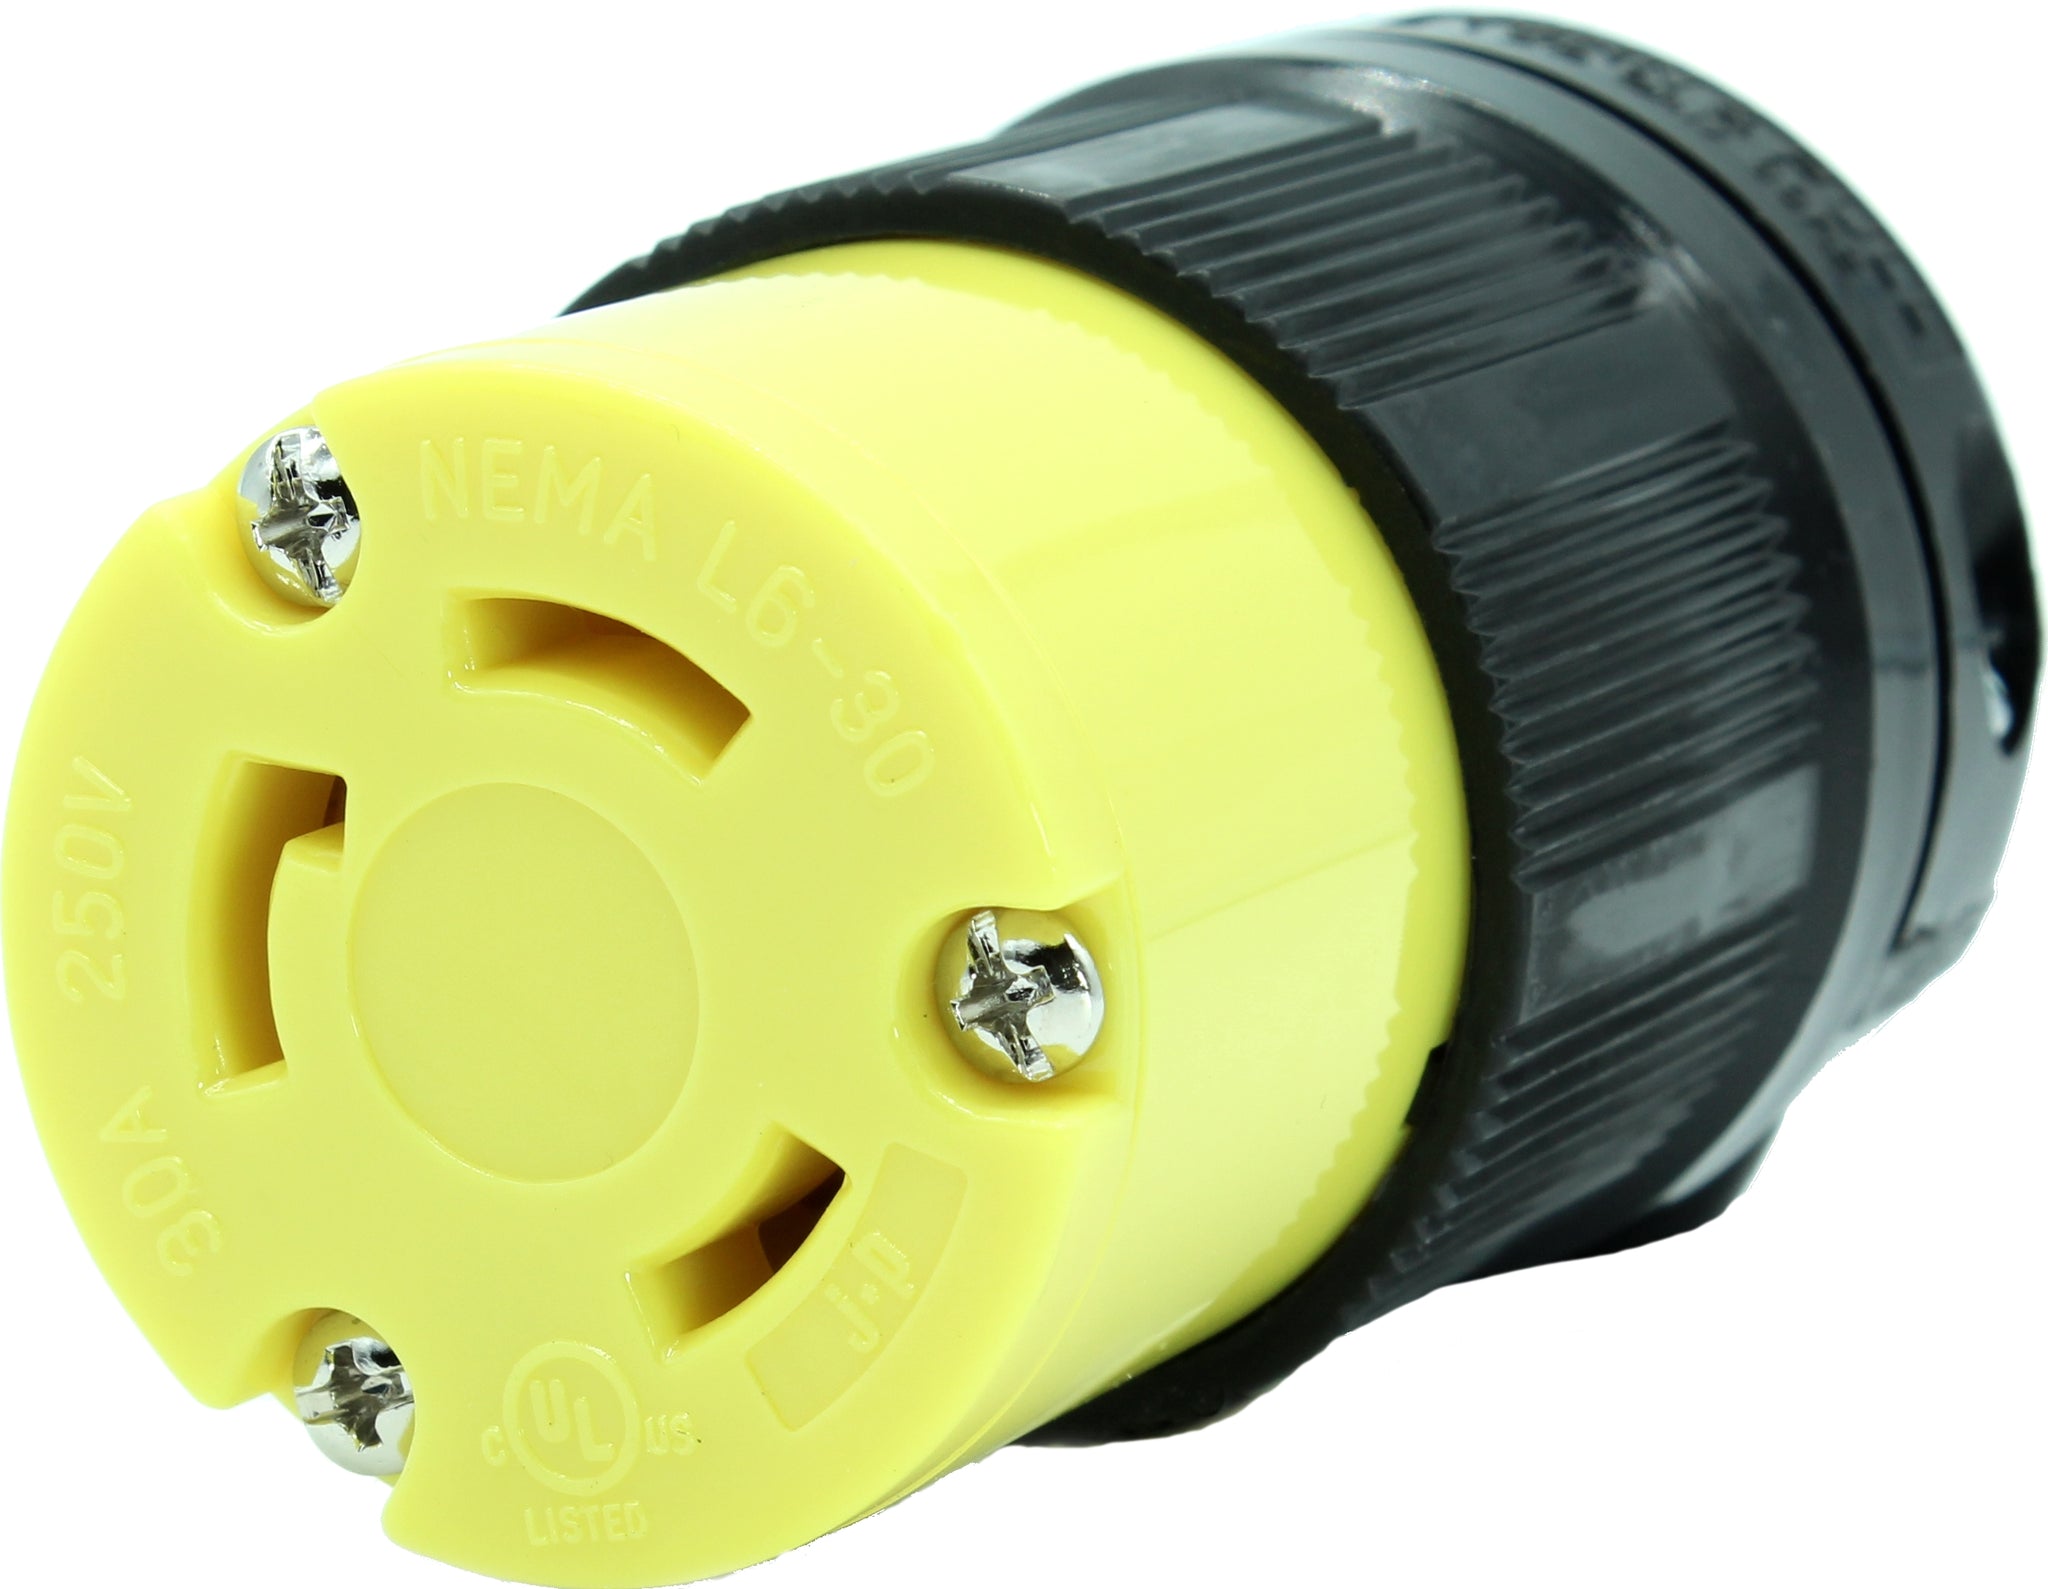 NEMA L6-30P 30A 250V 3-Prong Locking Male Plug with UL, C-UL Approval